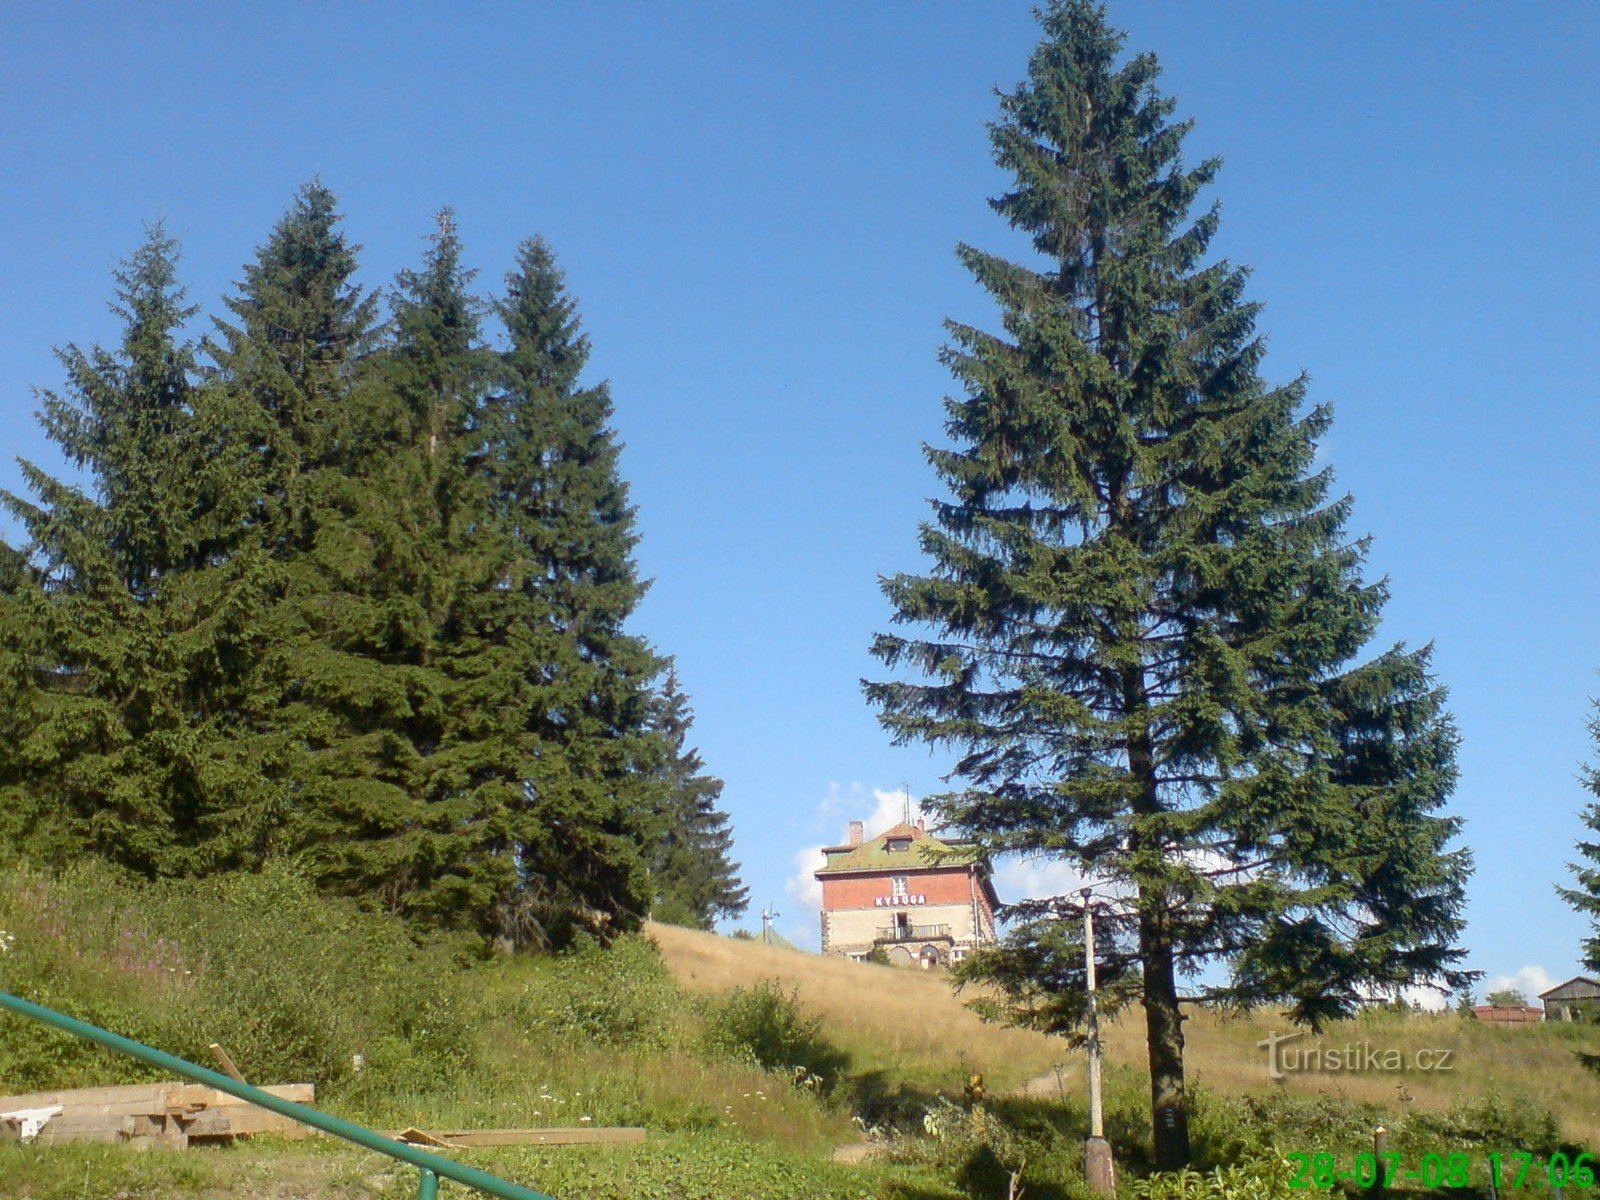 Kysuca cottage on the Slovak side